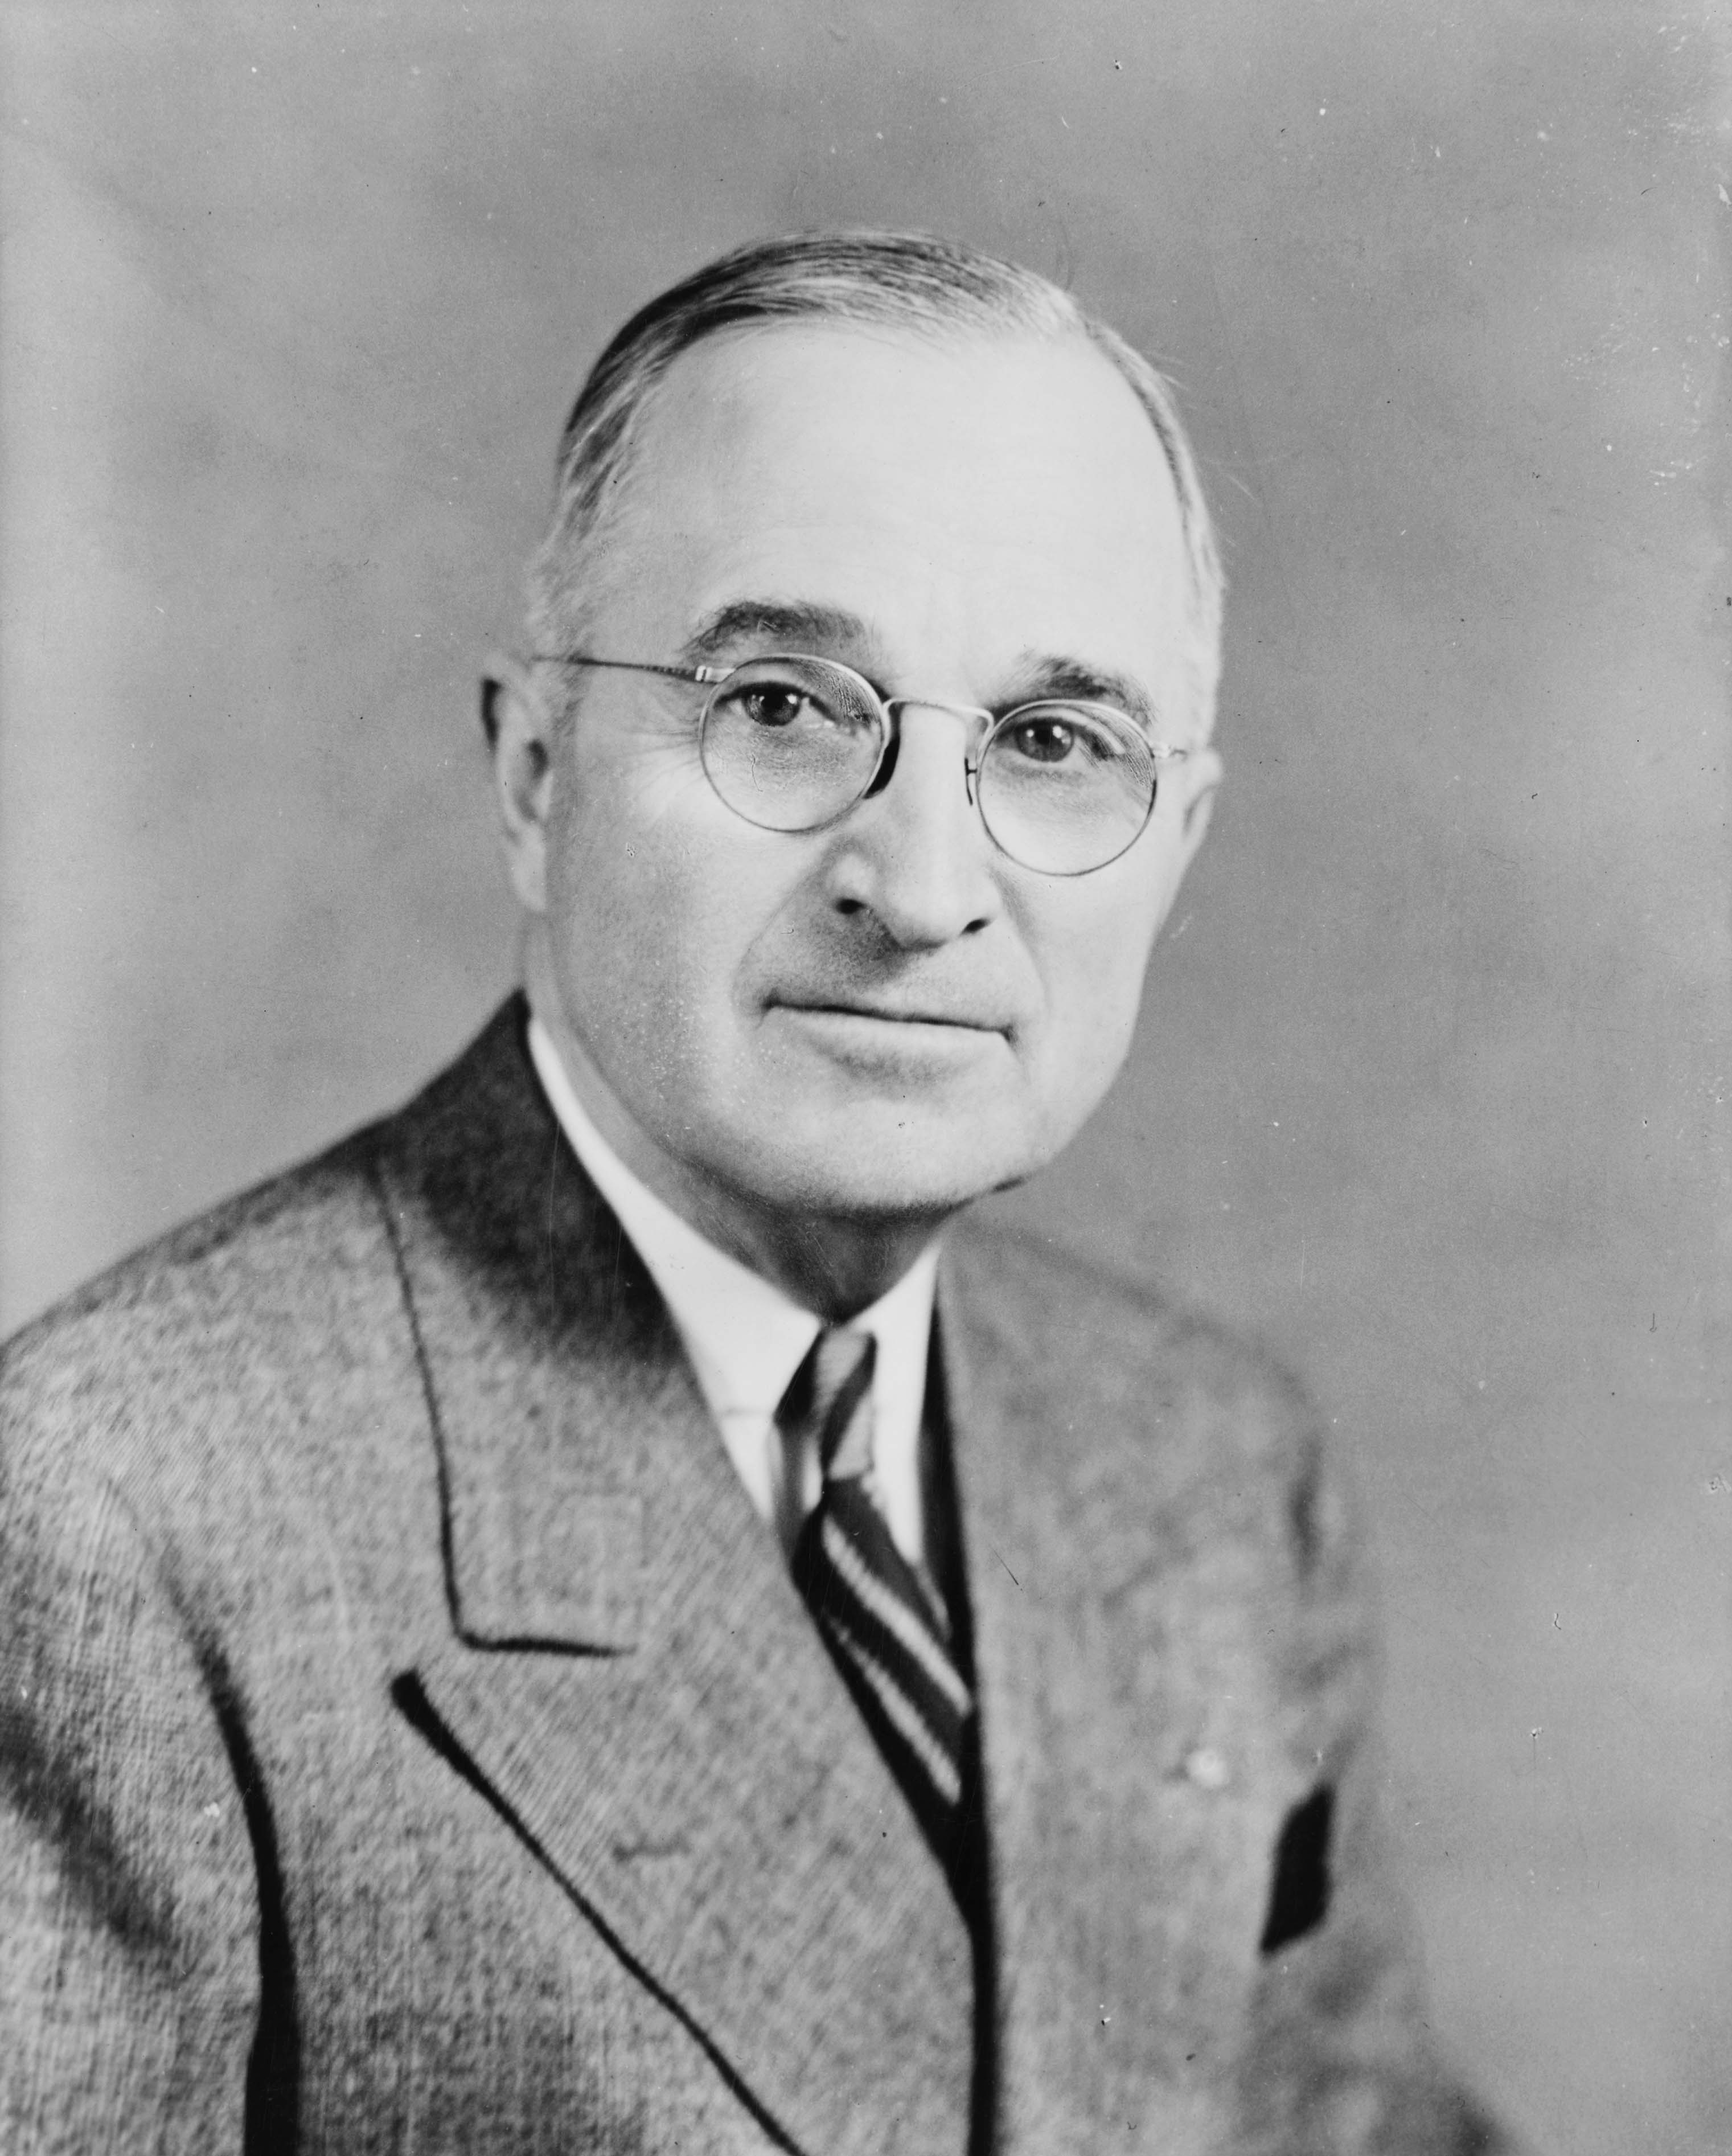 Harry_S_Truman%2C_bw_half-length_photo_portrait%2C_facing_front%2C_1945.jpg